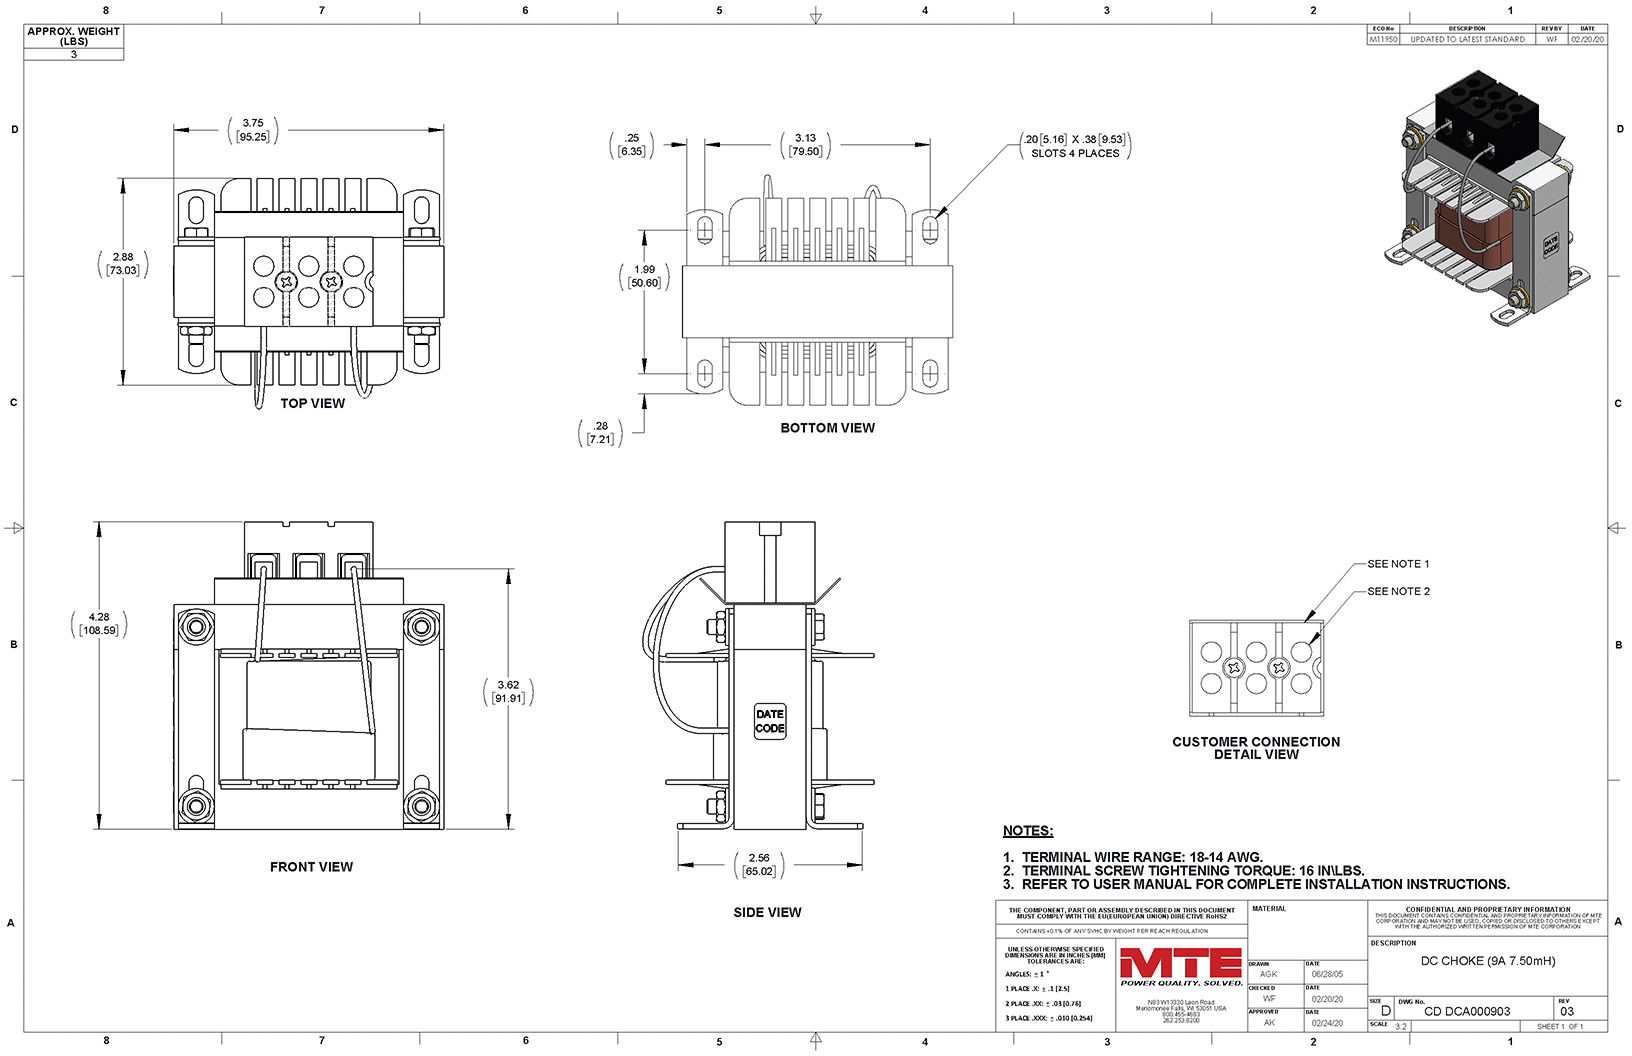 Drawings of MTE DC Link Choke DCA000903